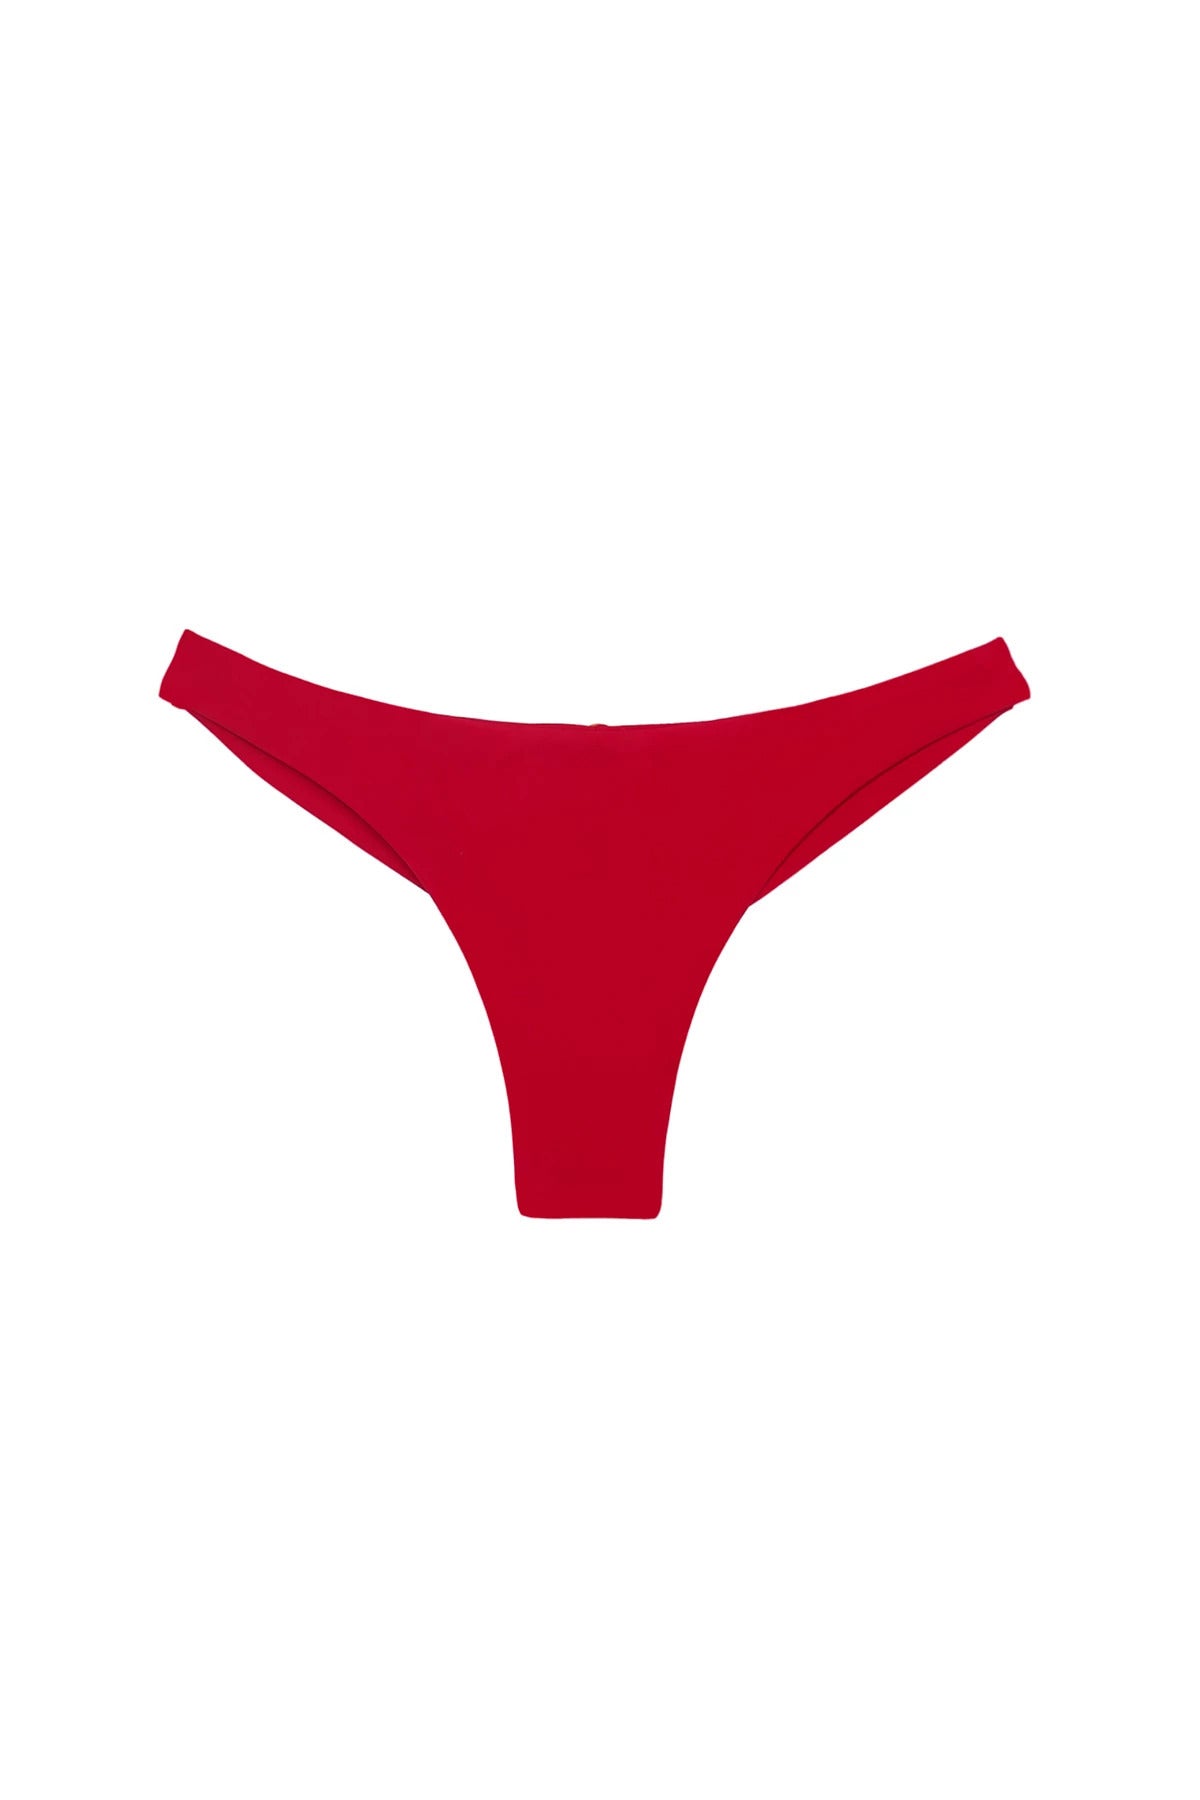 Vix Swimwear Women's Seamless Brazilian Bikini Bottom